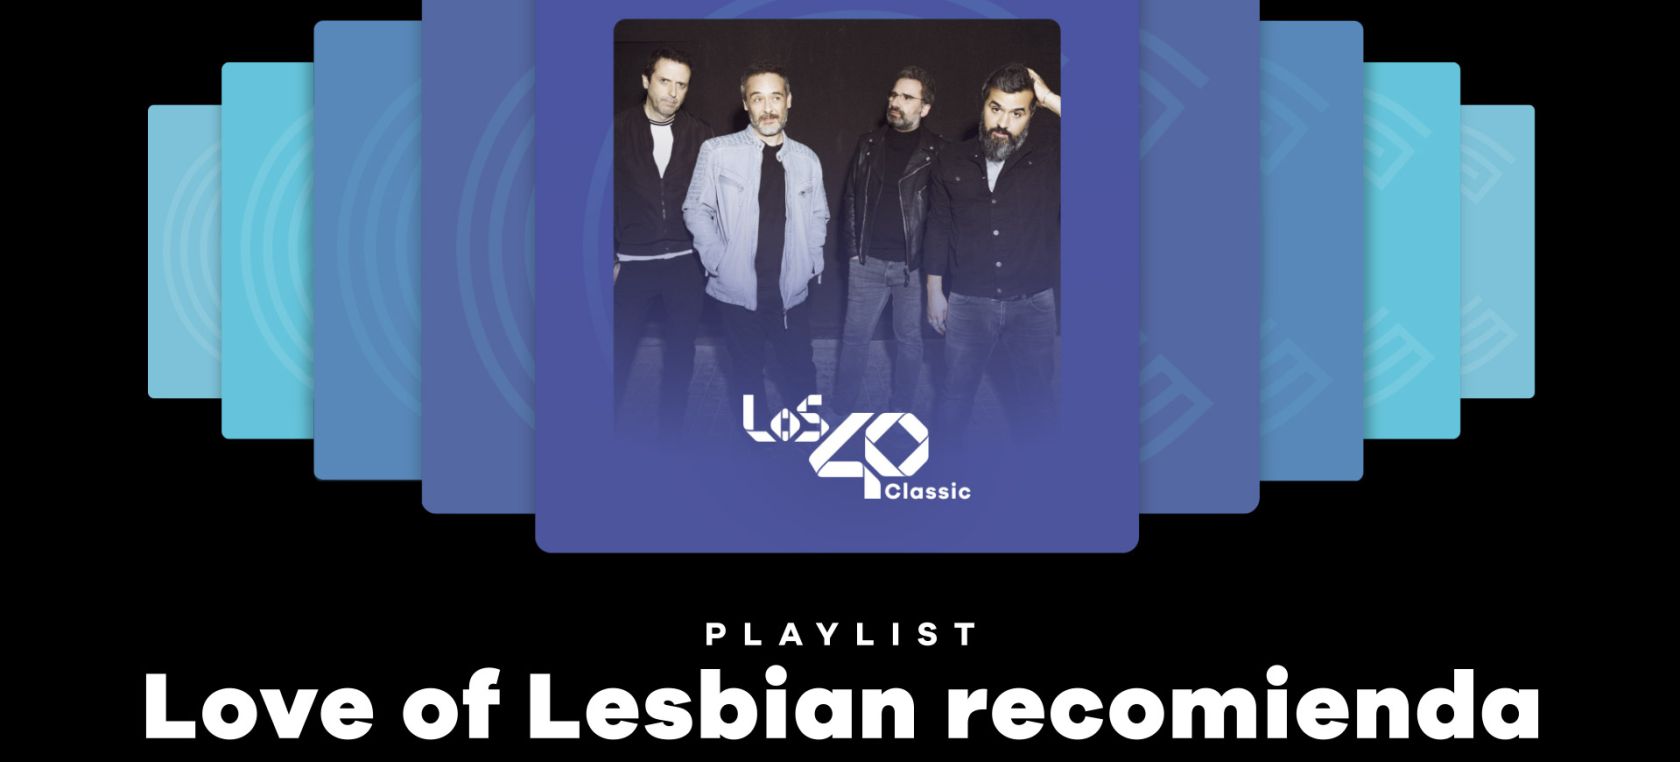 Love of Lesbian recomienda la mejor playlist classic para un ‘viaje épico’